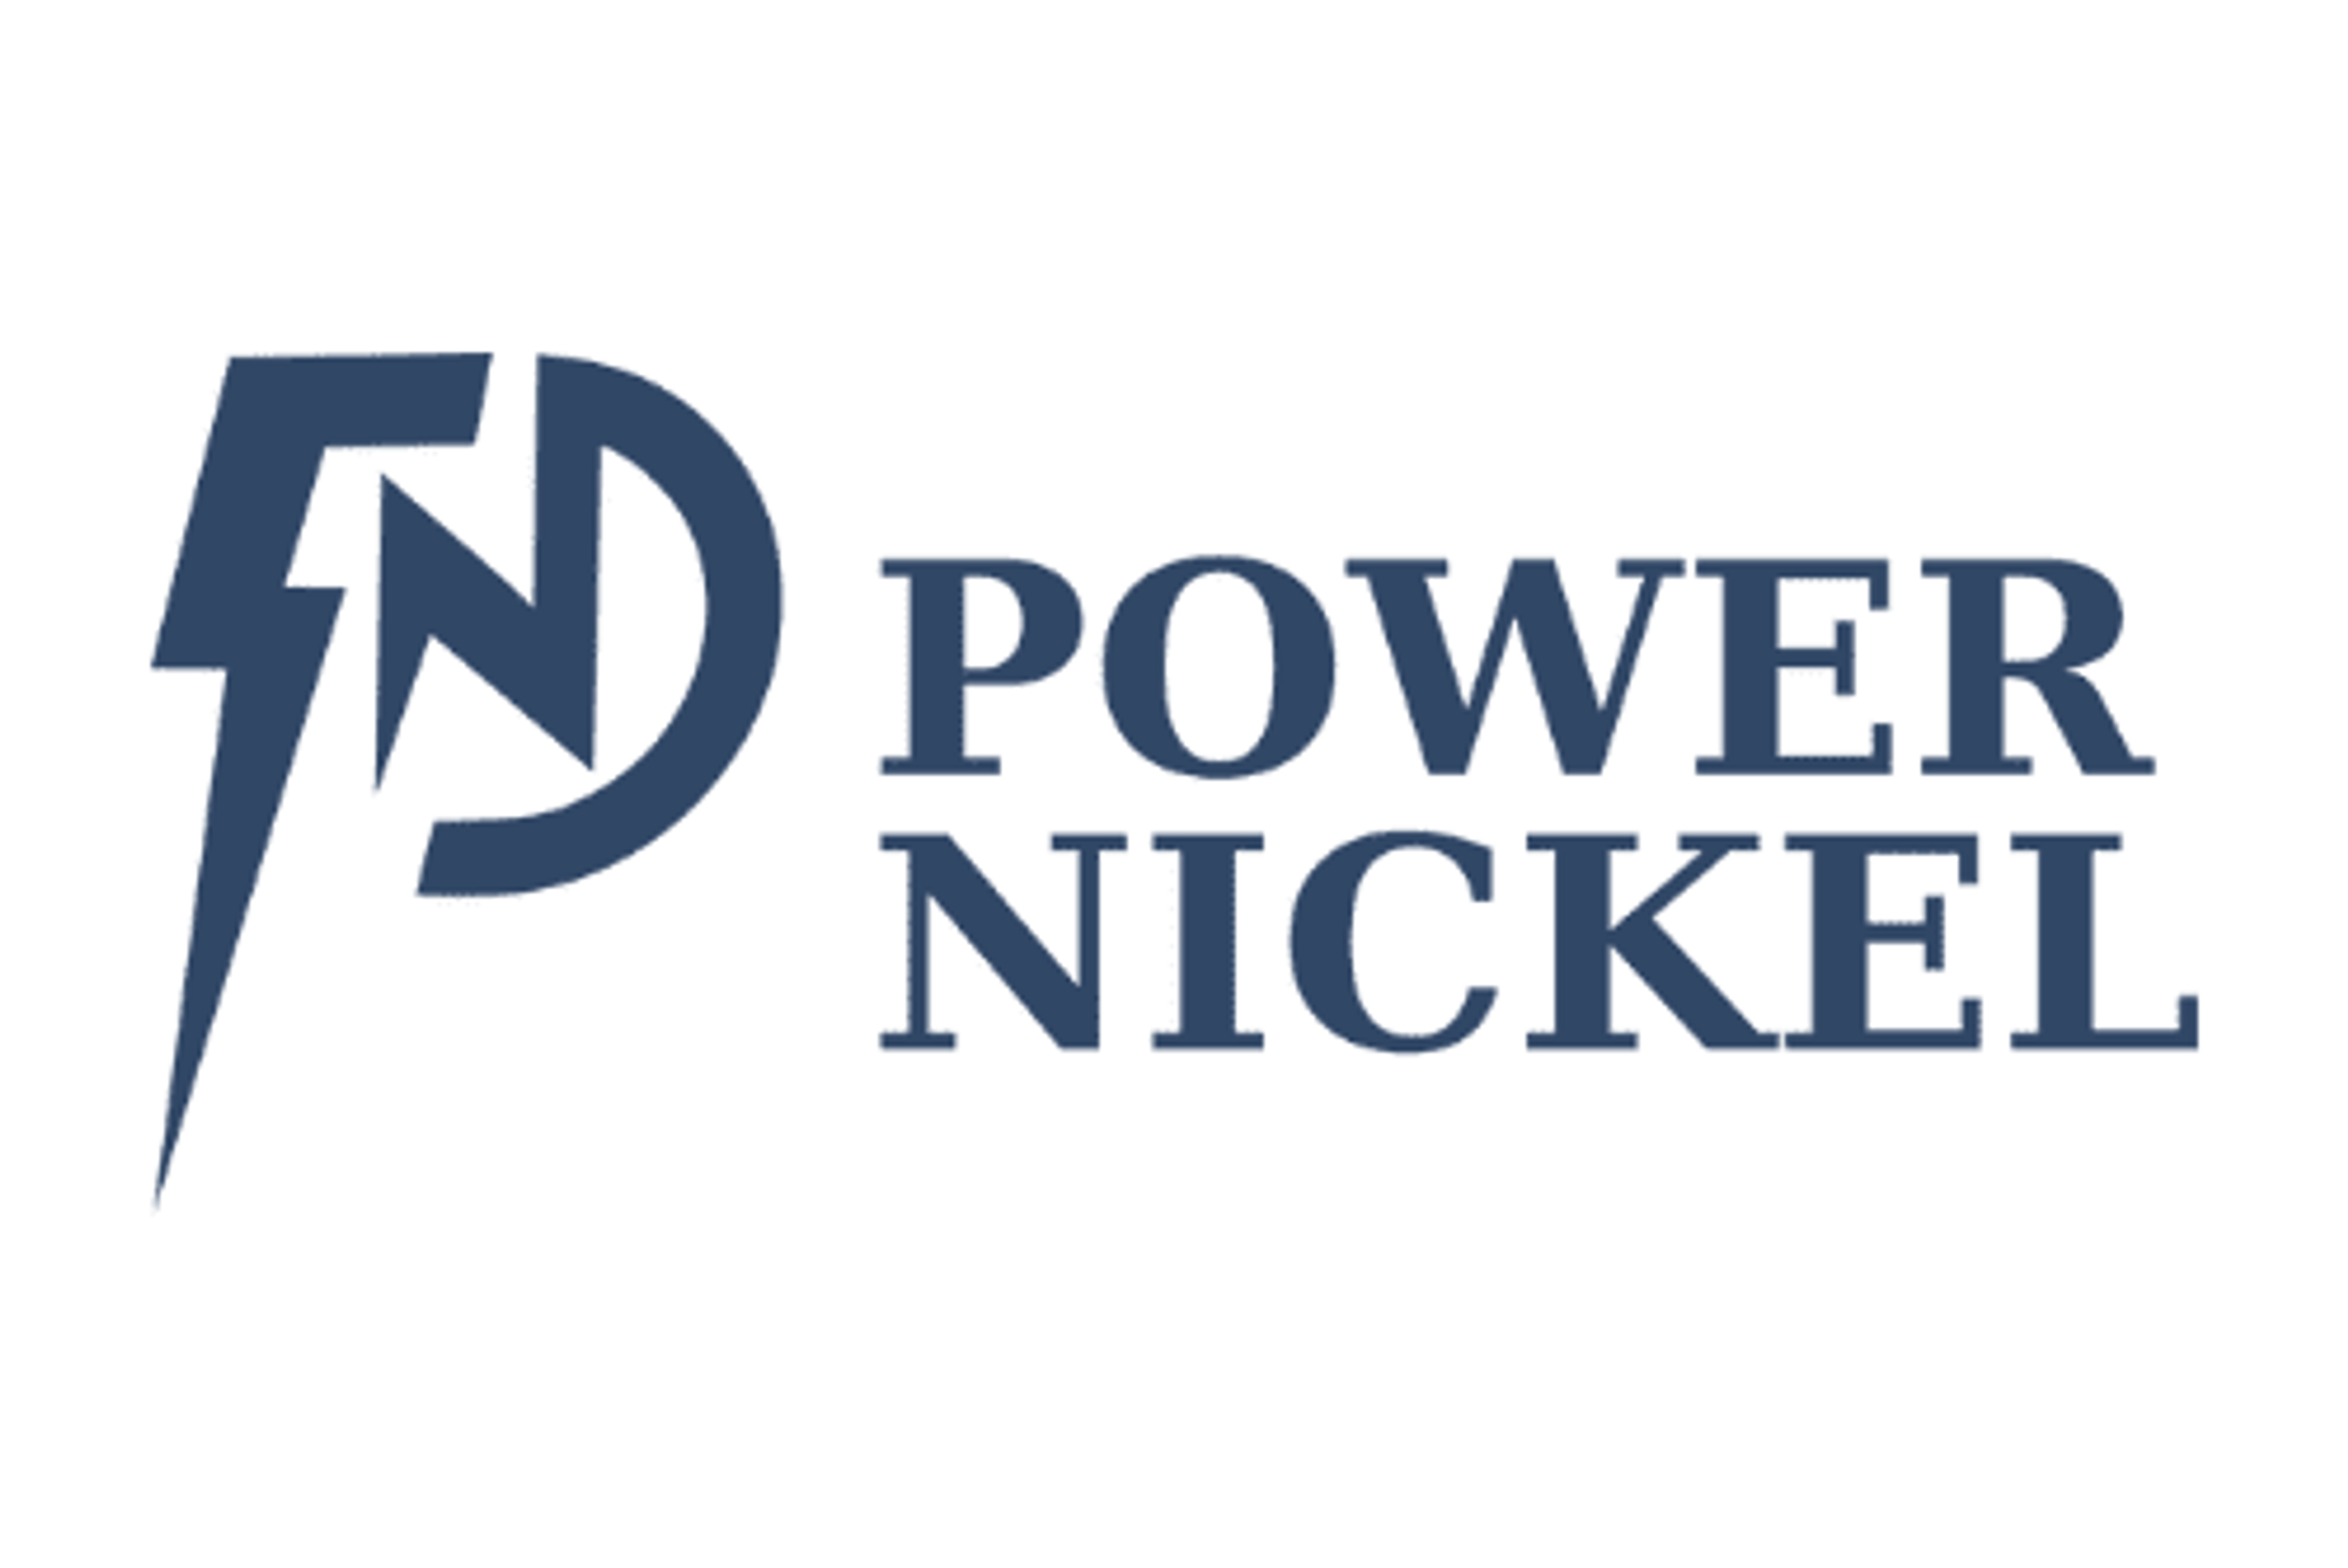 Warrant Exercise raises over $800,000 for Power Nickel